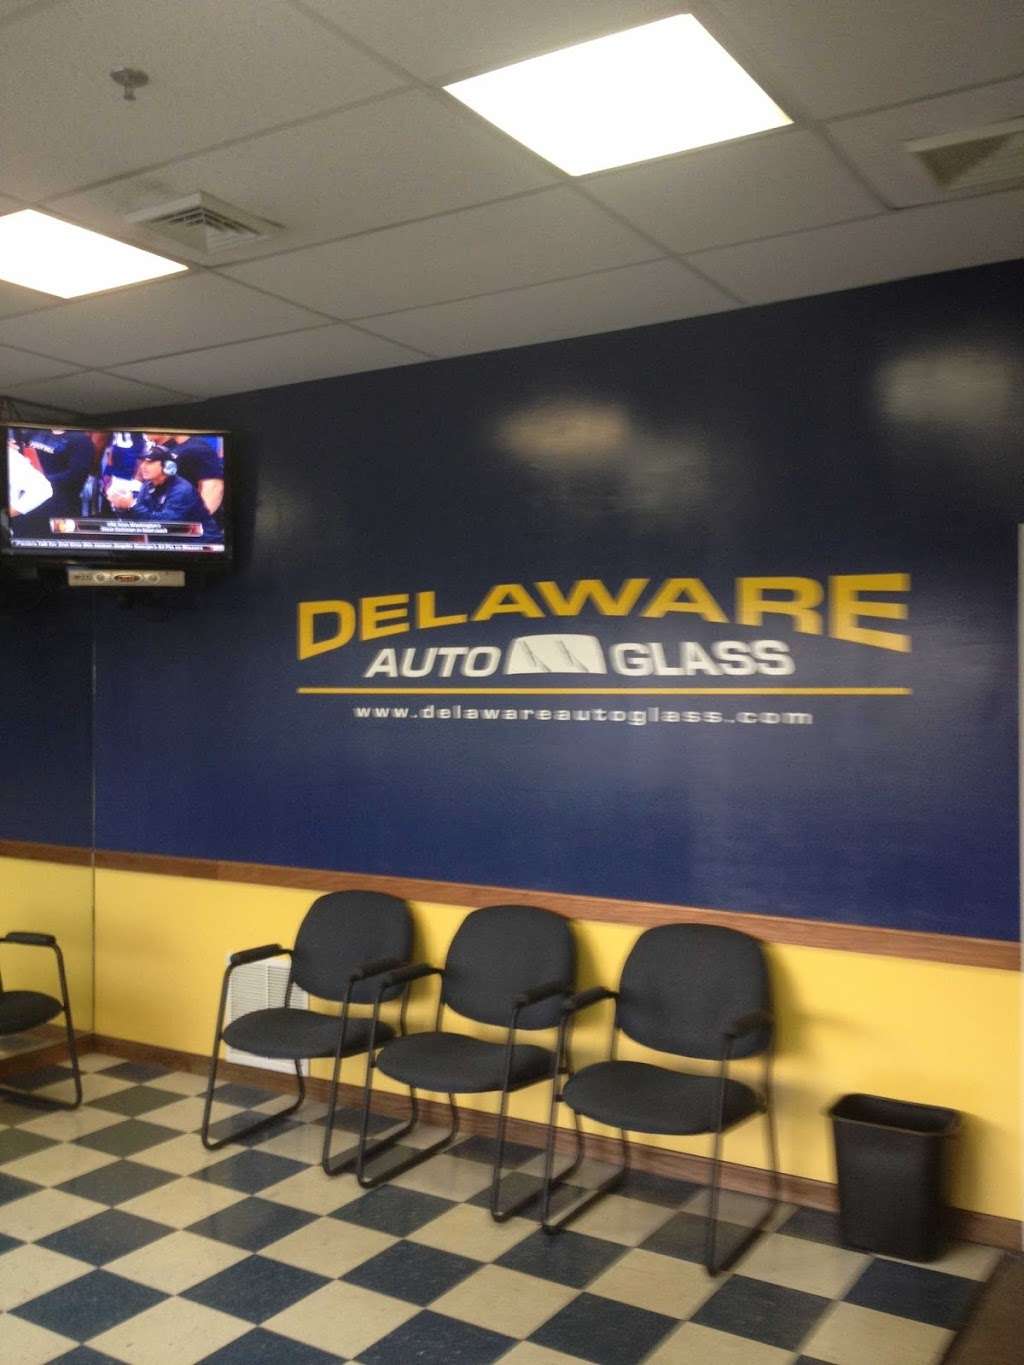 Delaware Auto Glass | 810 Pencader Dr, Newark, DE 19702 | Phone: (302) 709-2300